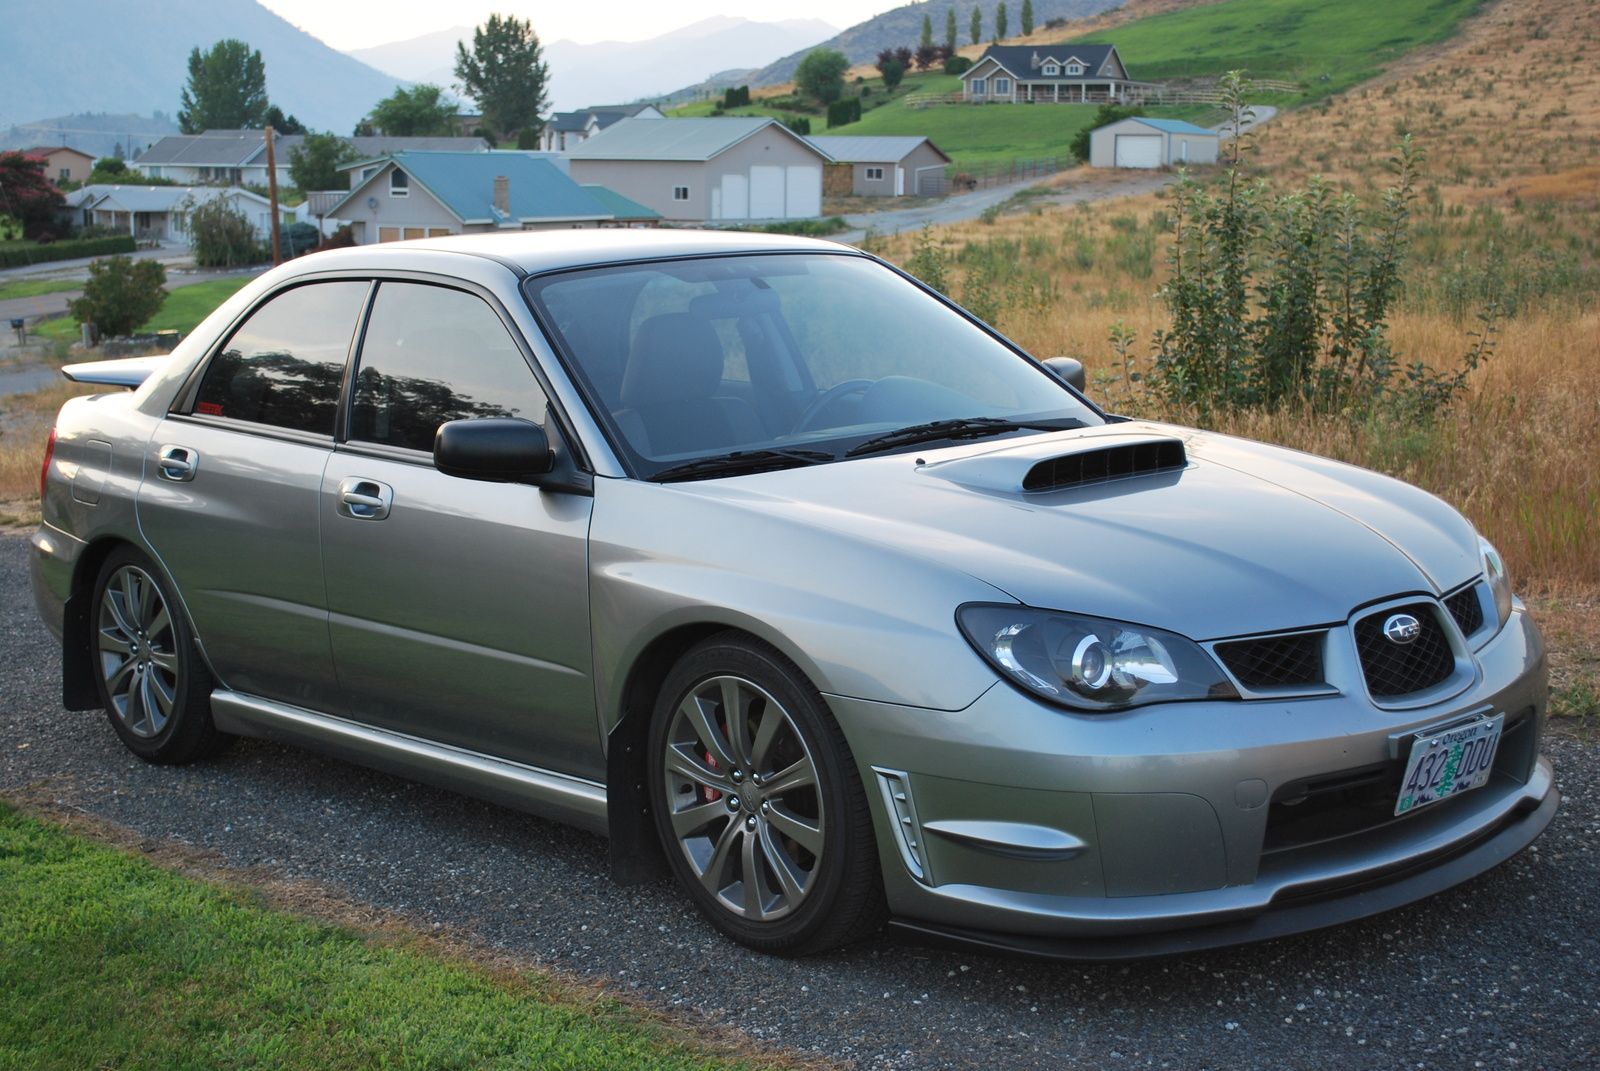 2007 Subaru Impreza Wagon 2.5i 060 Times, Top Speed